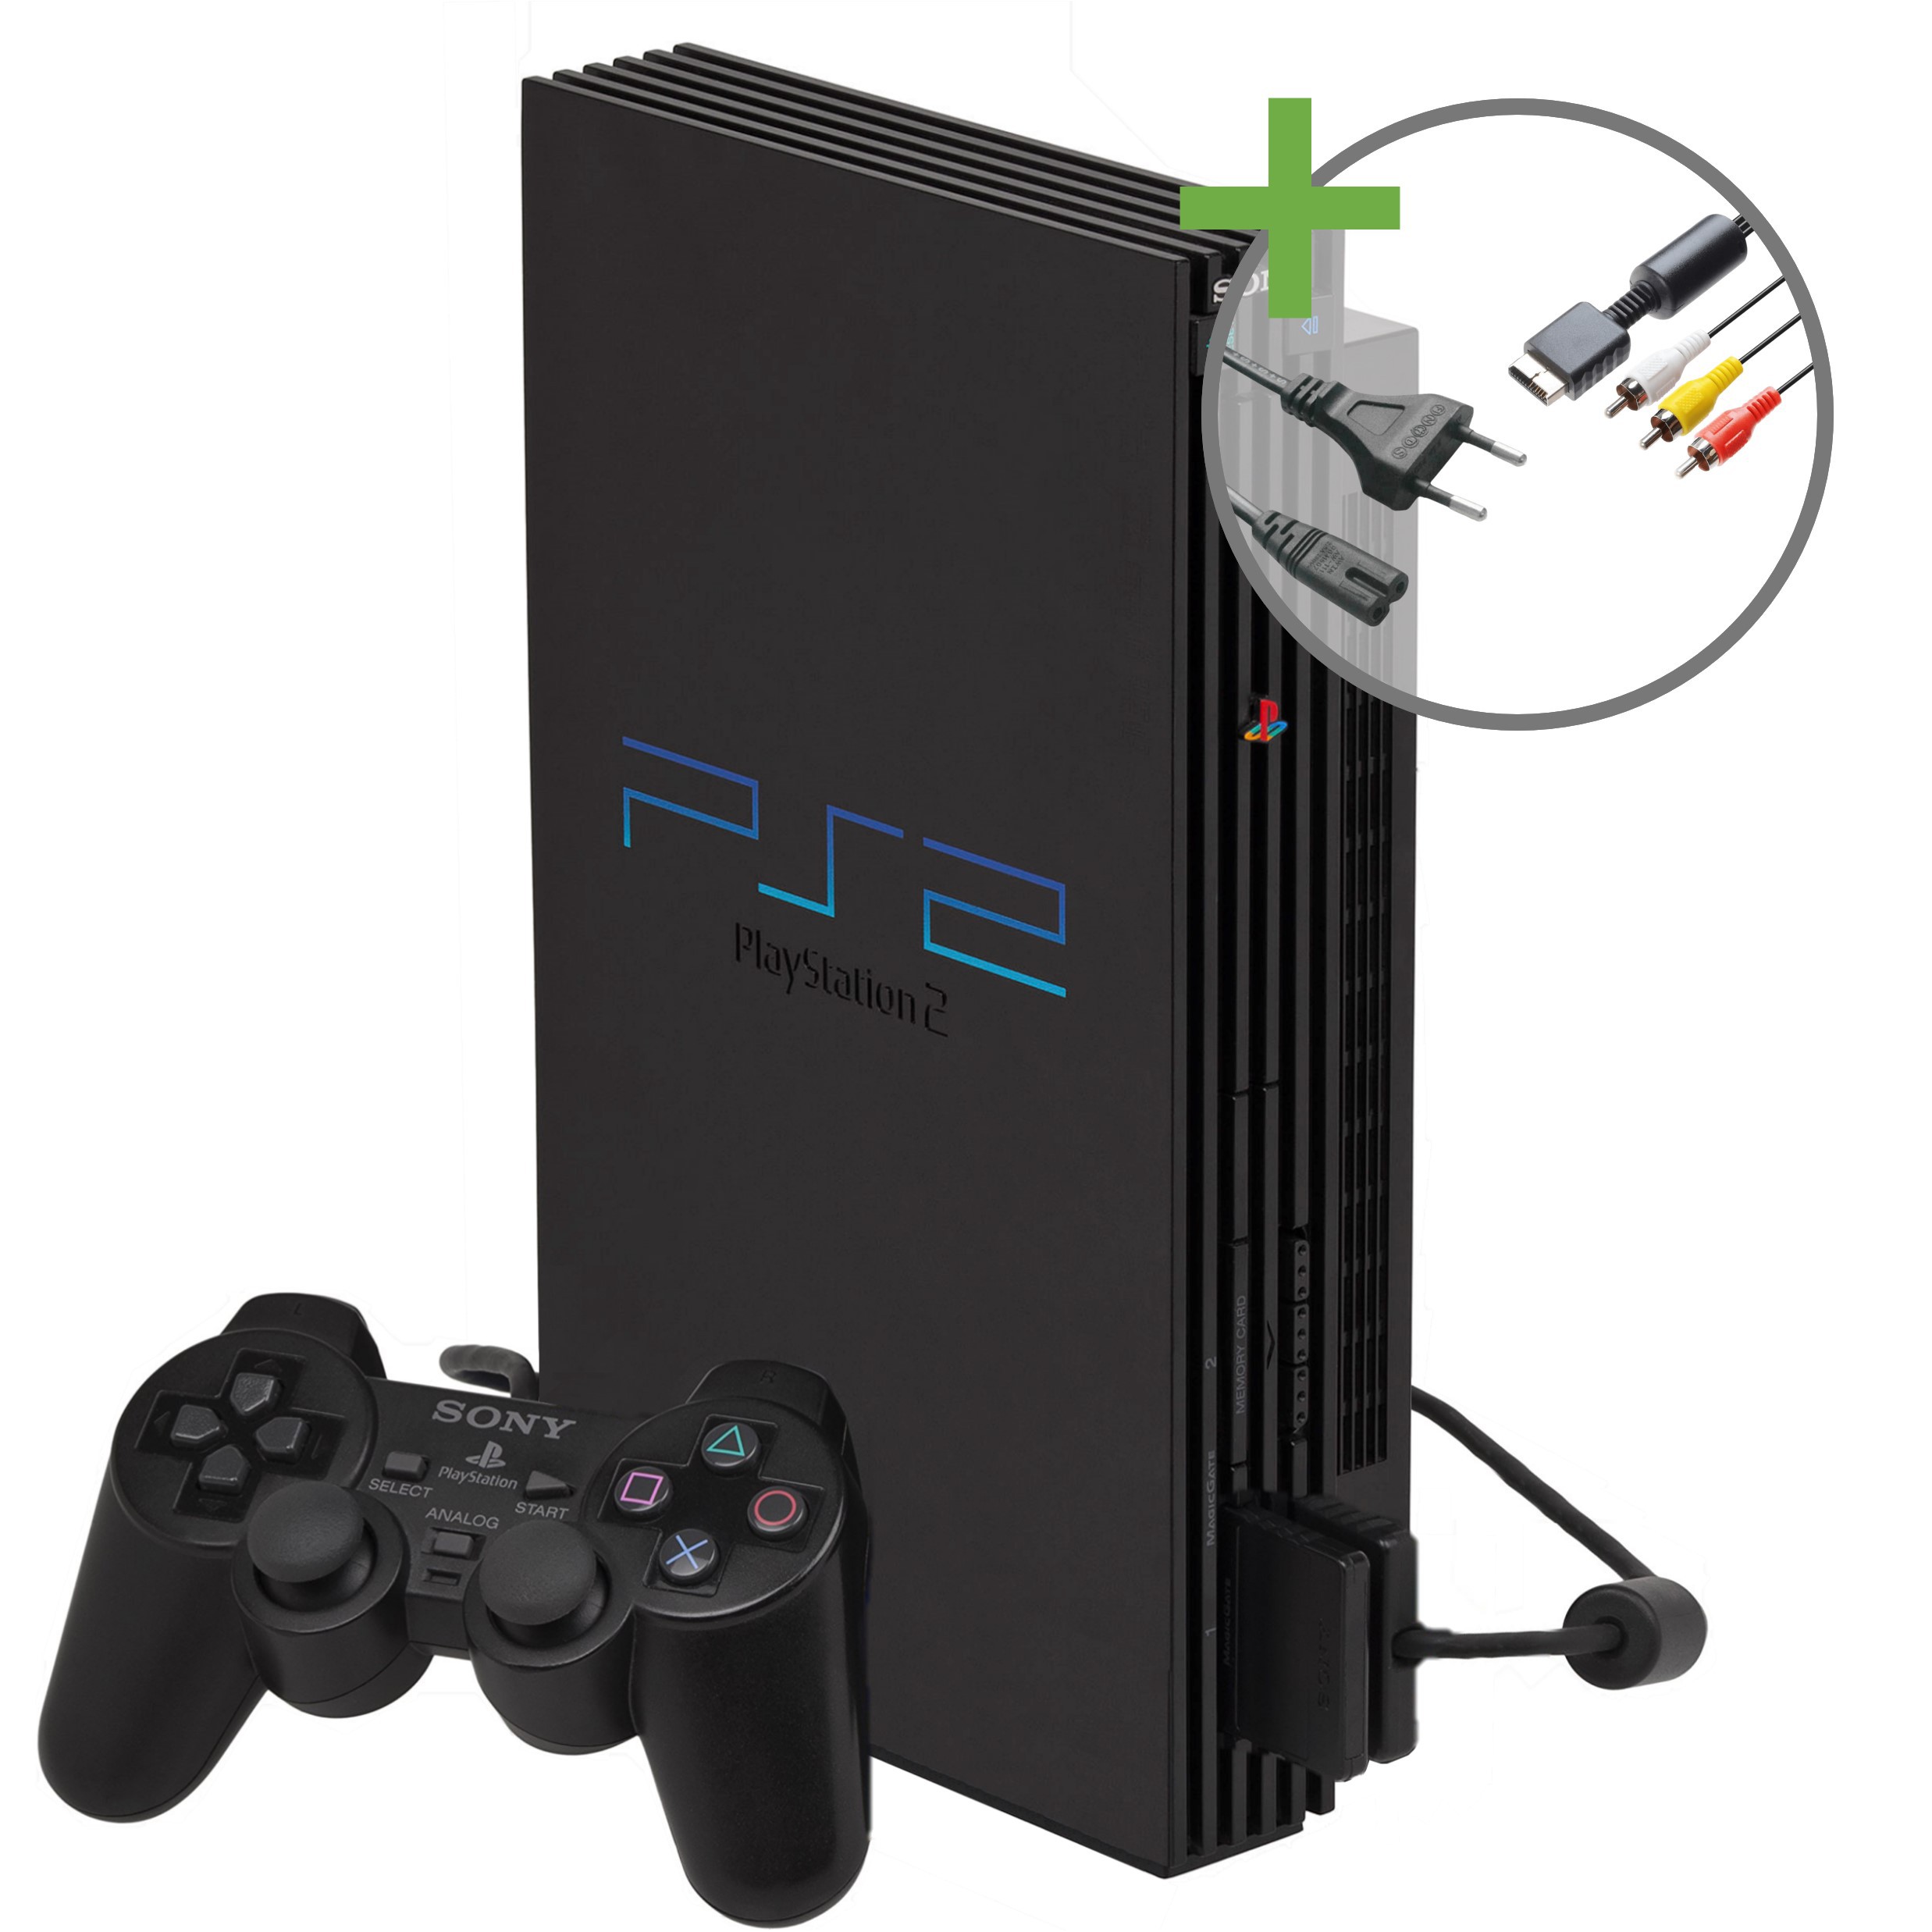 Sony PlayStation 2 Phat Starter Pack - Black Edition - Playstation 2 Hardware